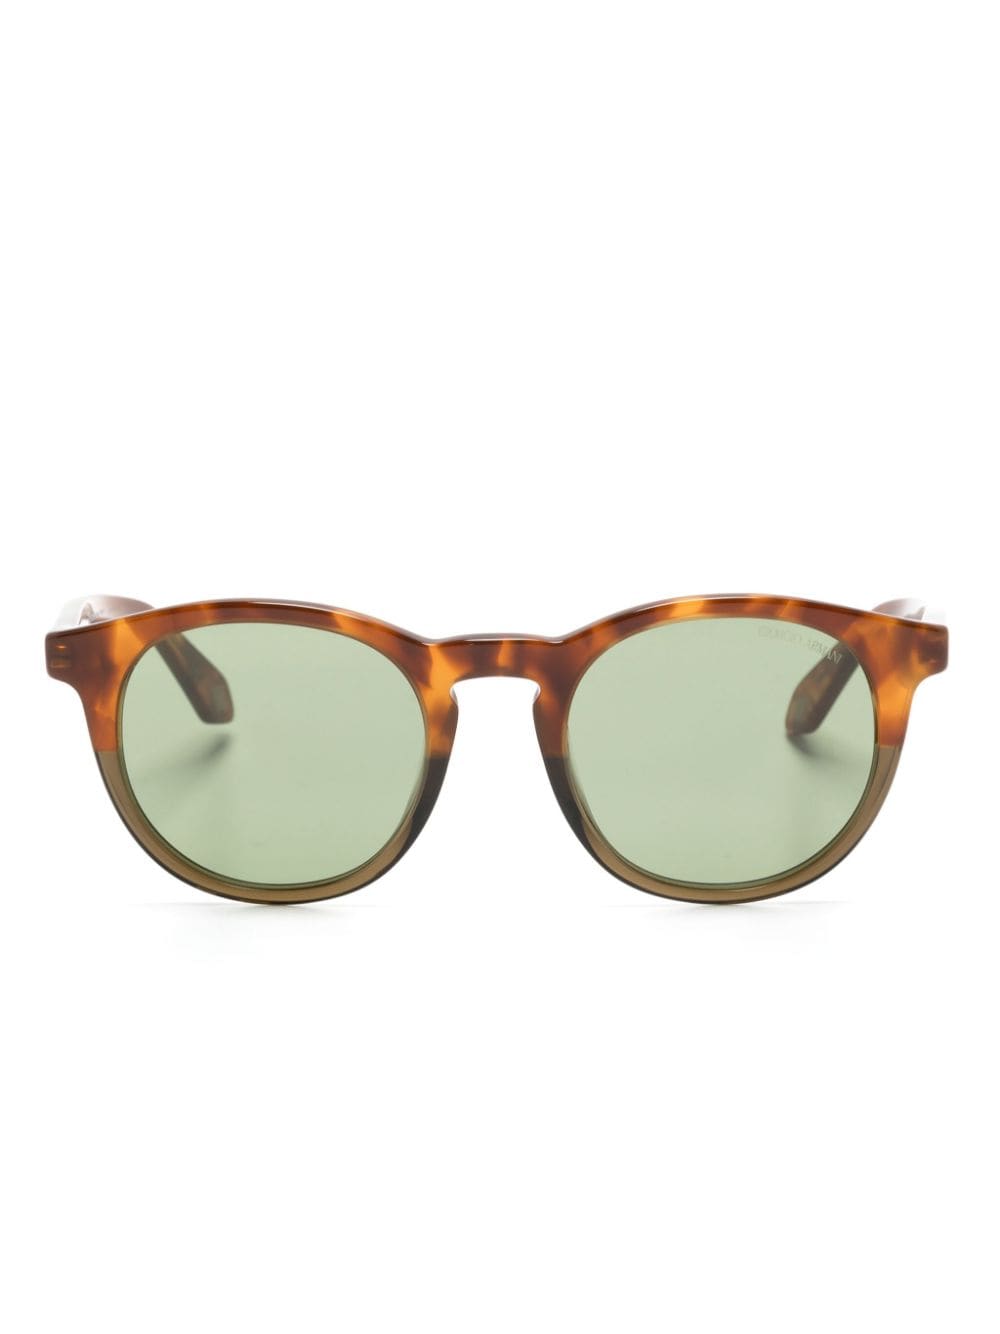 Giorgio Armani pantos-frame sunglasses - Brown von Giorgio Armani